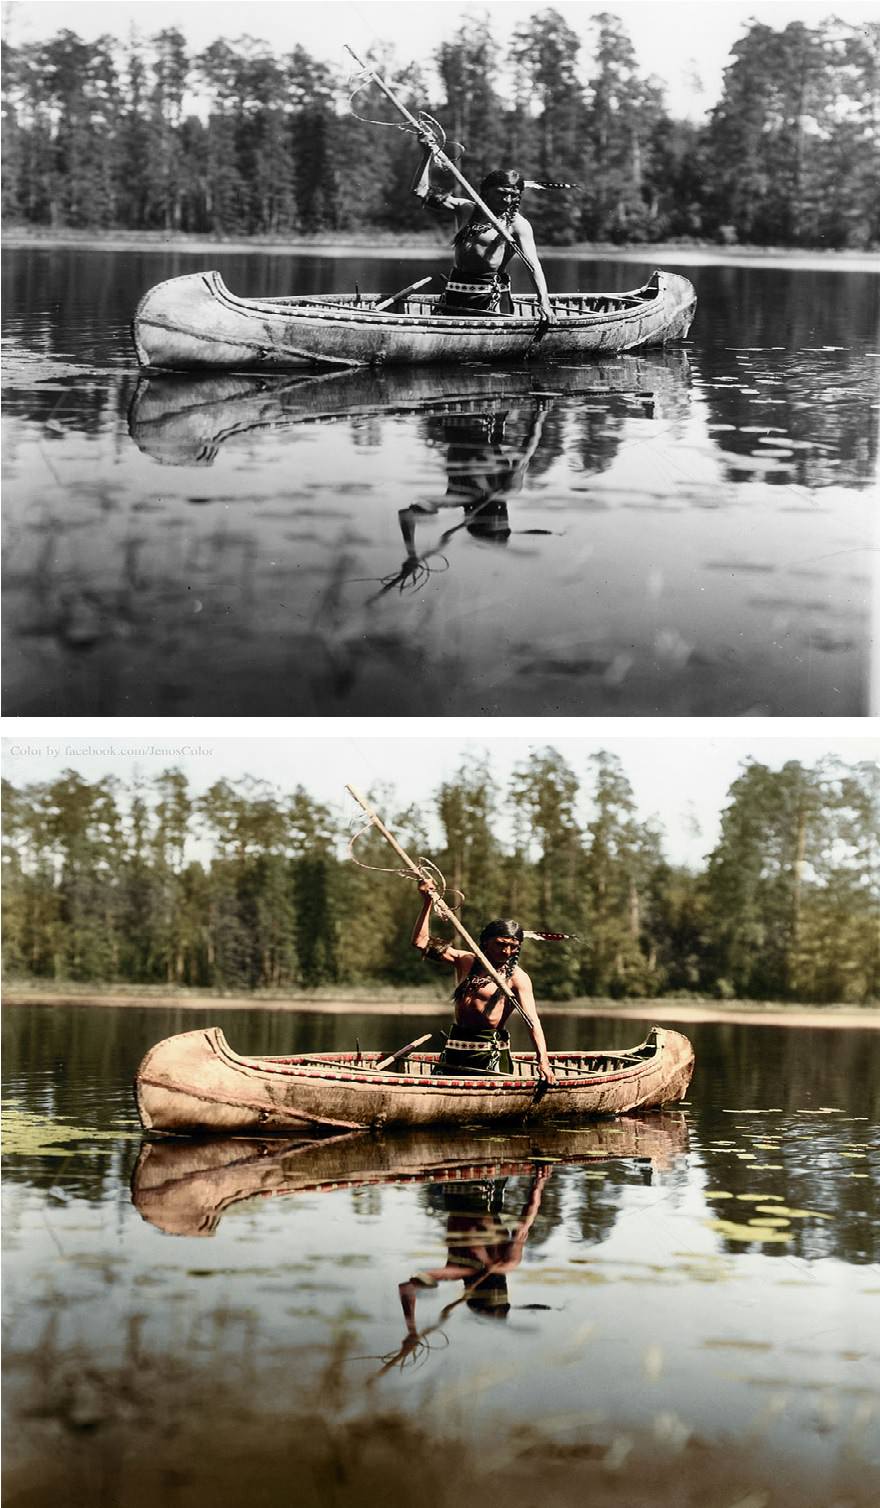 An Ojibwe Native American spearfishing, Minnesota, 1908